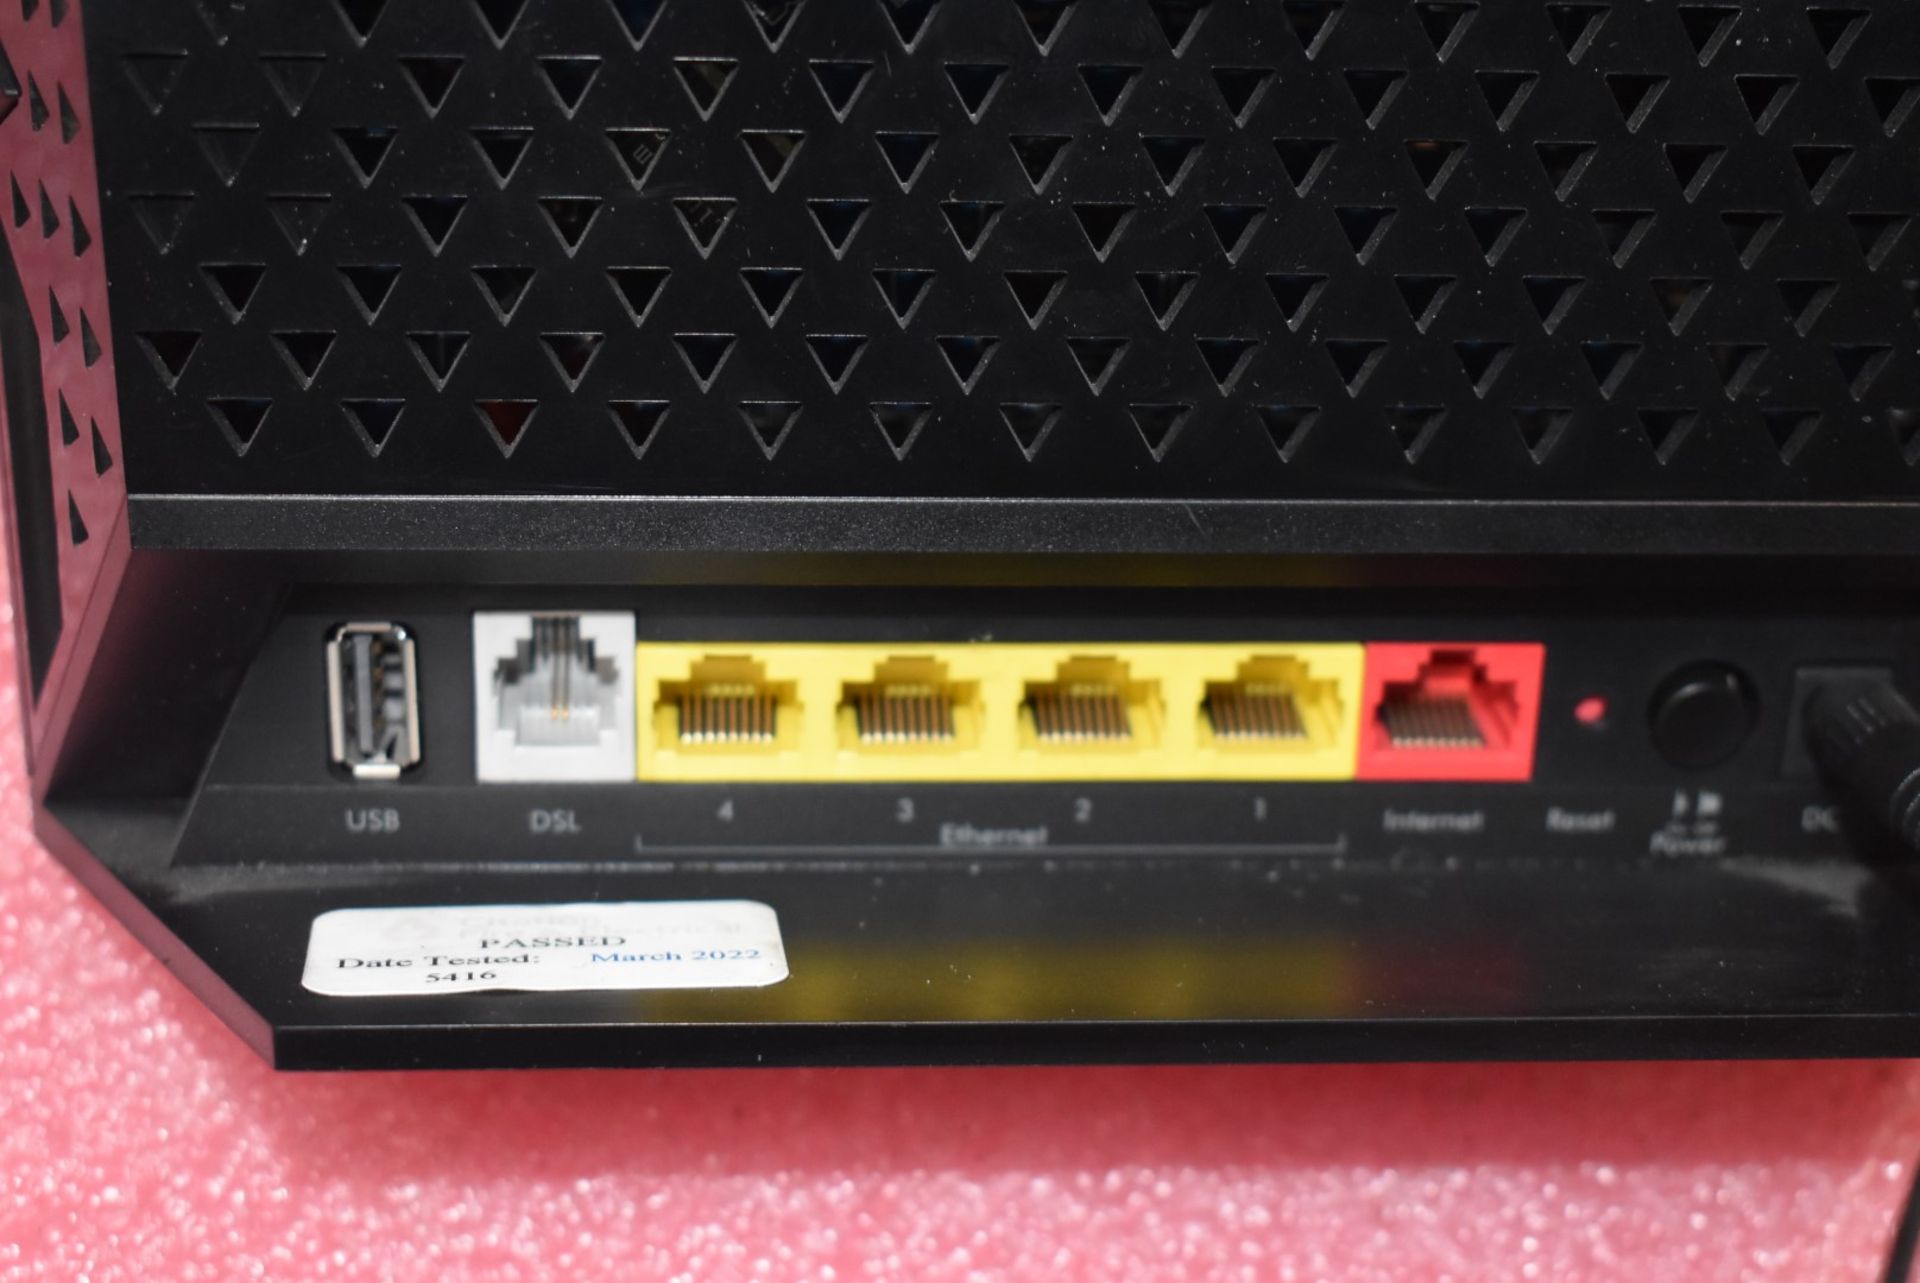 1 x Netgear D6400 AC1600 WiFi VDSL/ADSL Modem Router - Includes Power Adaptor - Image 2 of 4